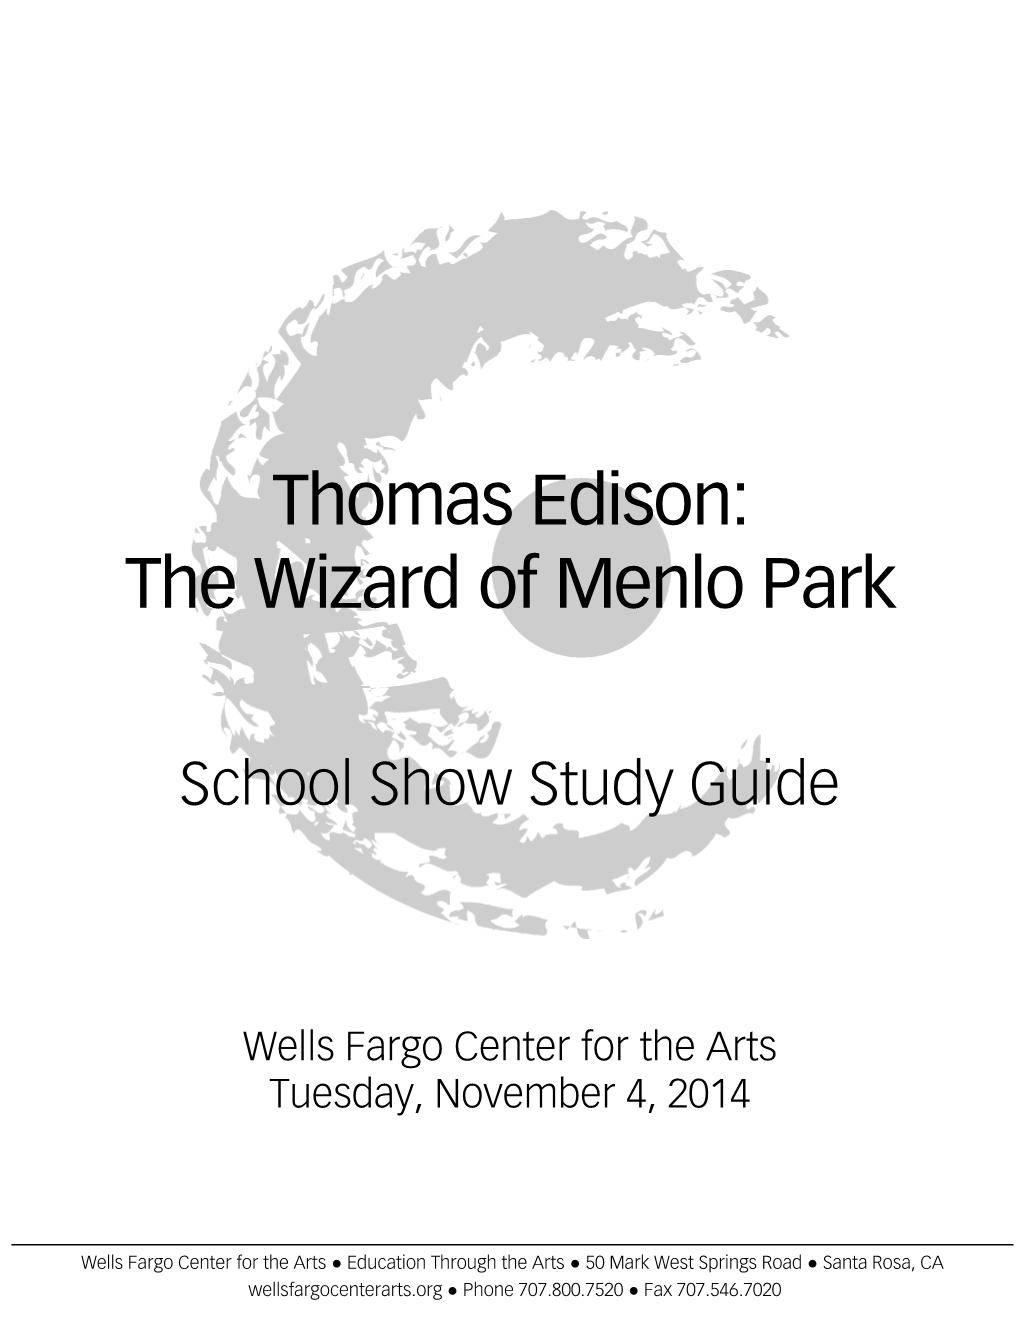 Thomas Edison: the Wizard of Menlo Park